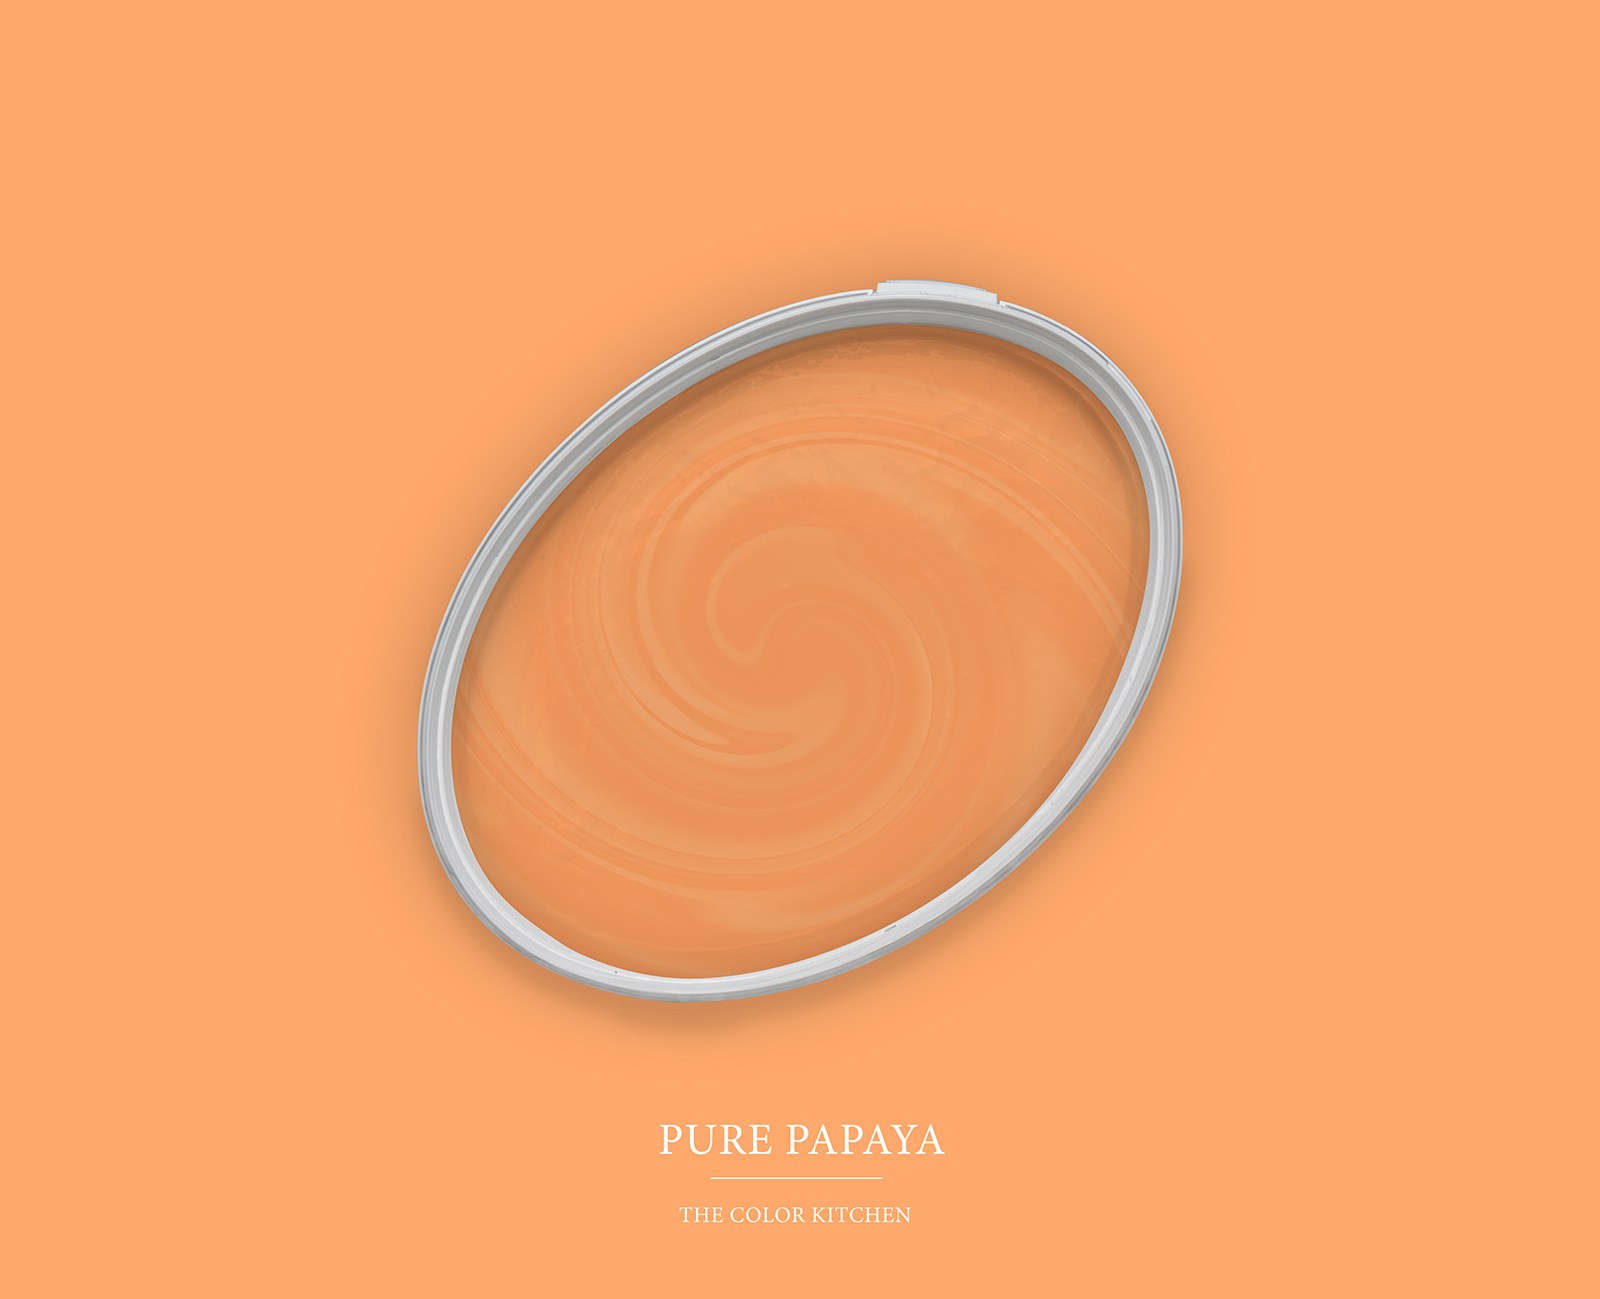         Wandfarbe TCK5010 »Pure Papaya« in knalligem Orange – 2,5 Liter
    